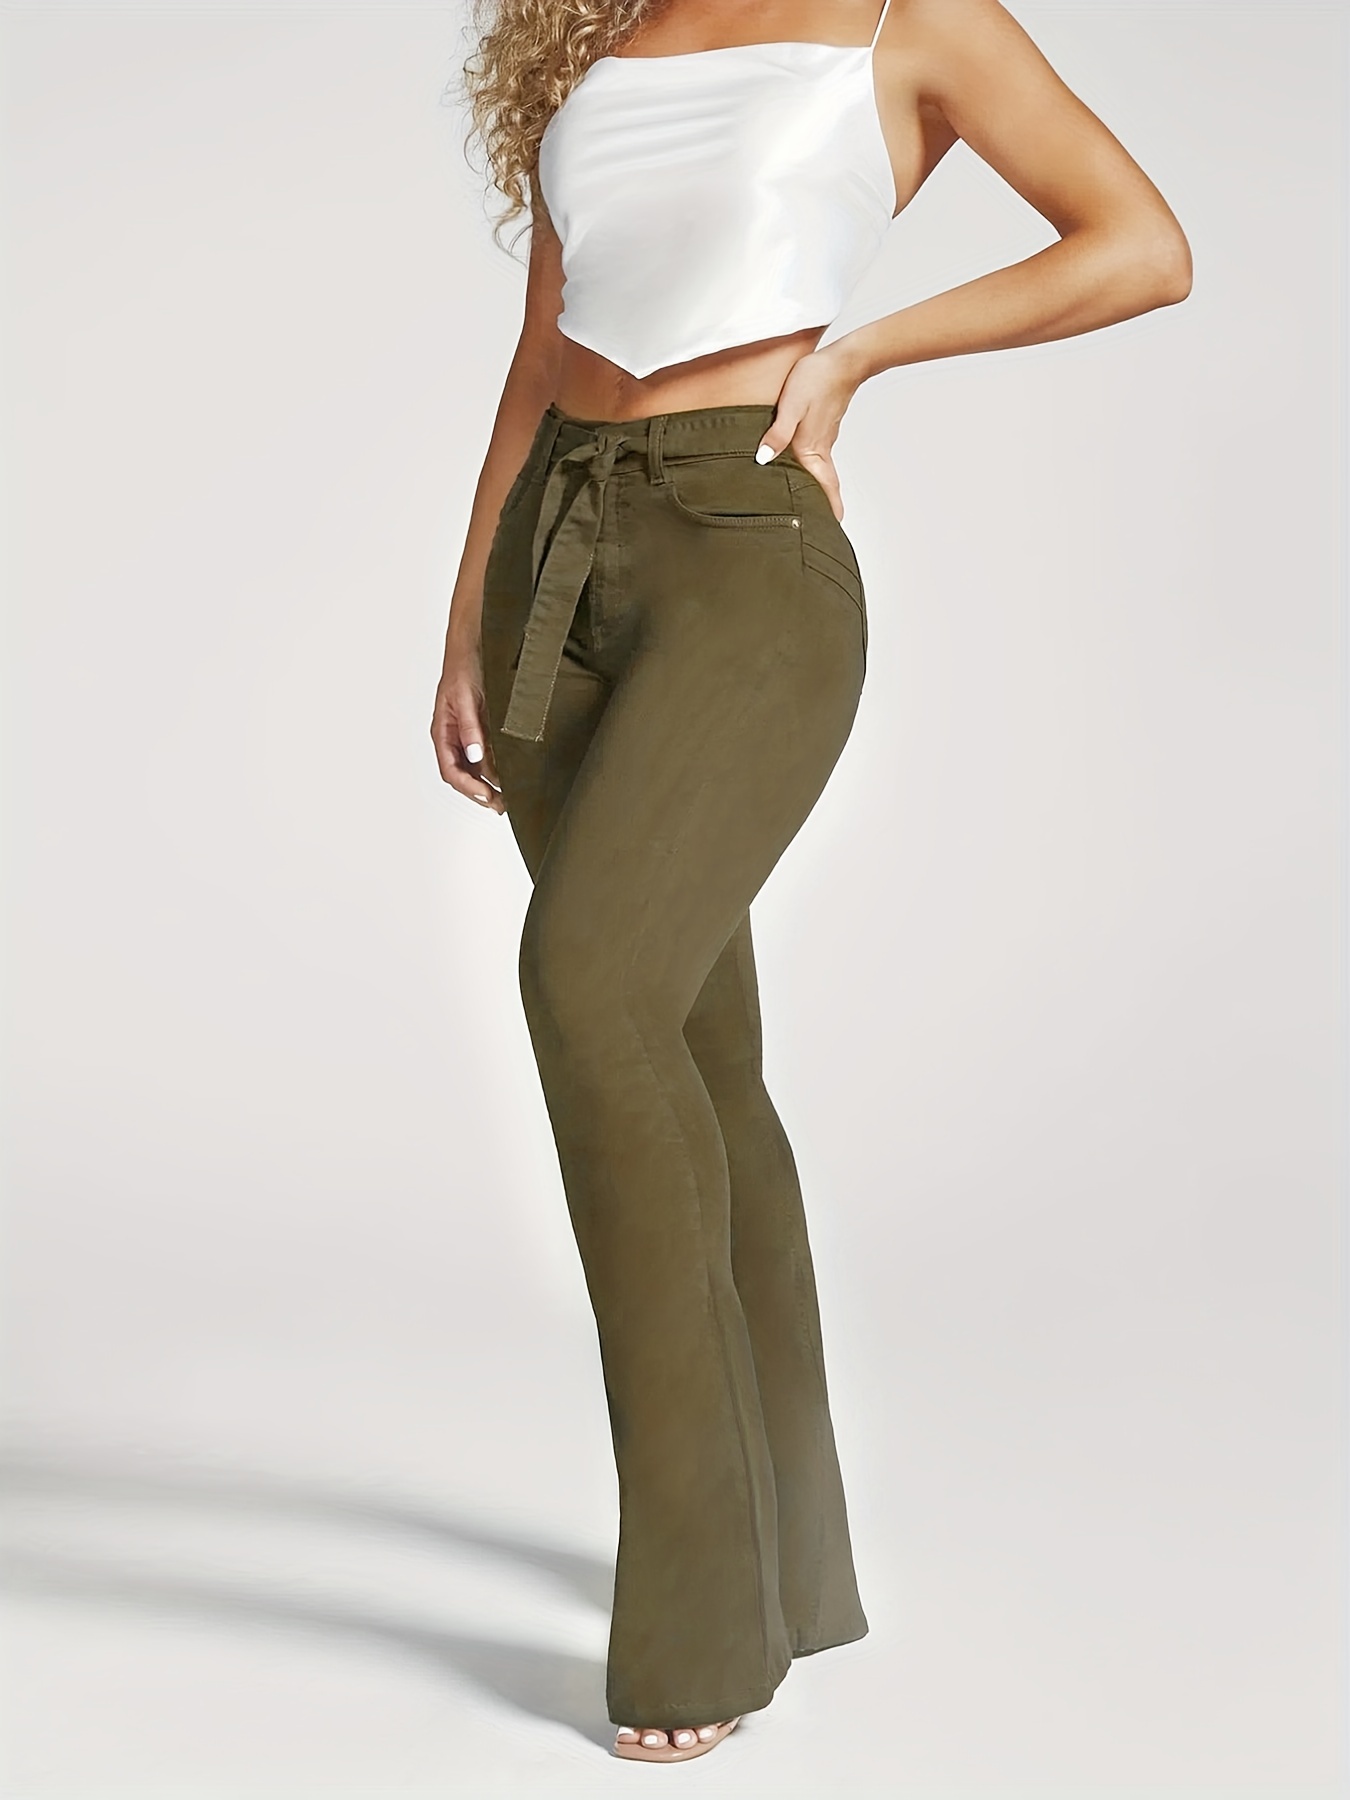 Tie Belt Olive Green Bootcut Jeans, High Stretch Mid Waist Solid Color Bell  Bottoms Flare Vintage Y2K Denim Pants, Women's Denim Jeans & Clothing